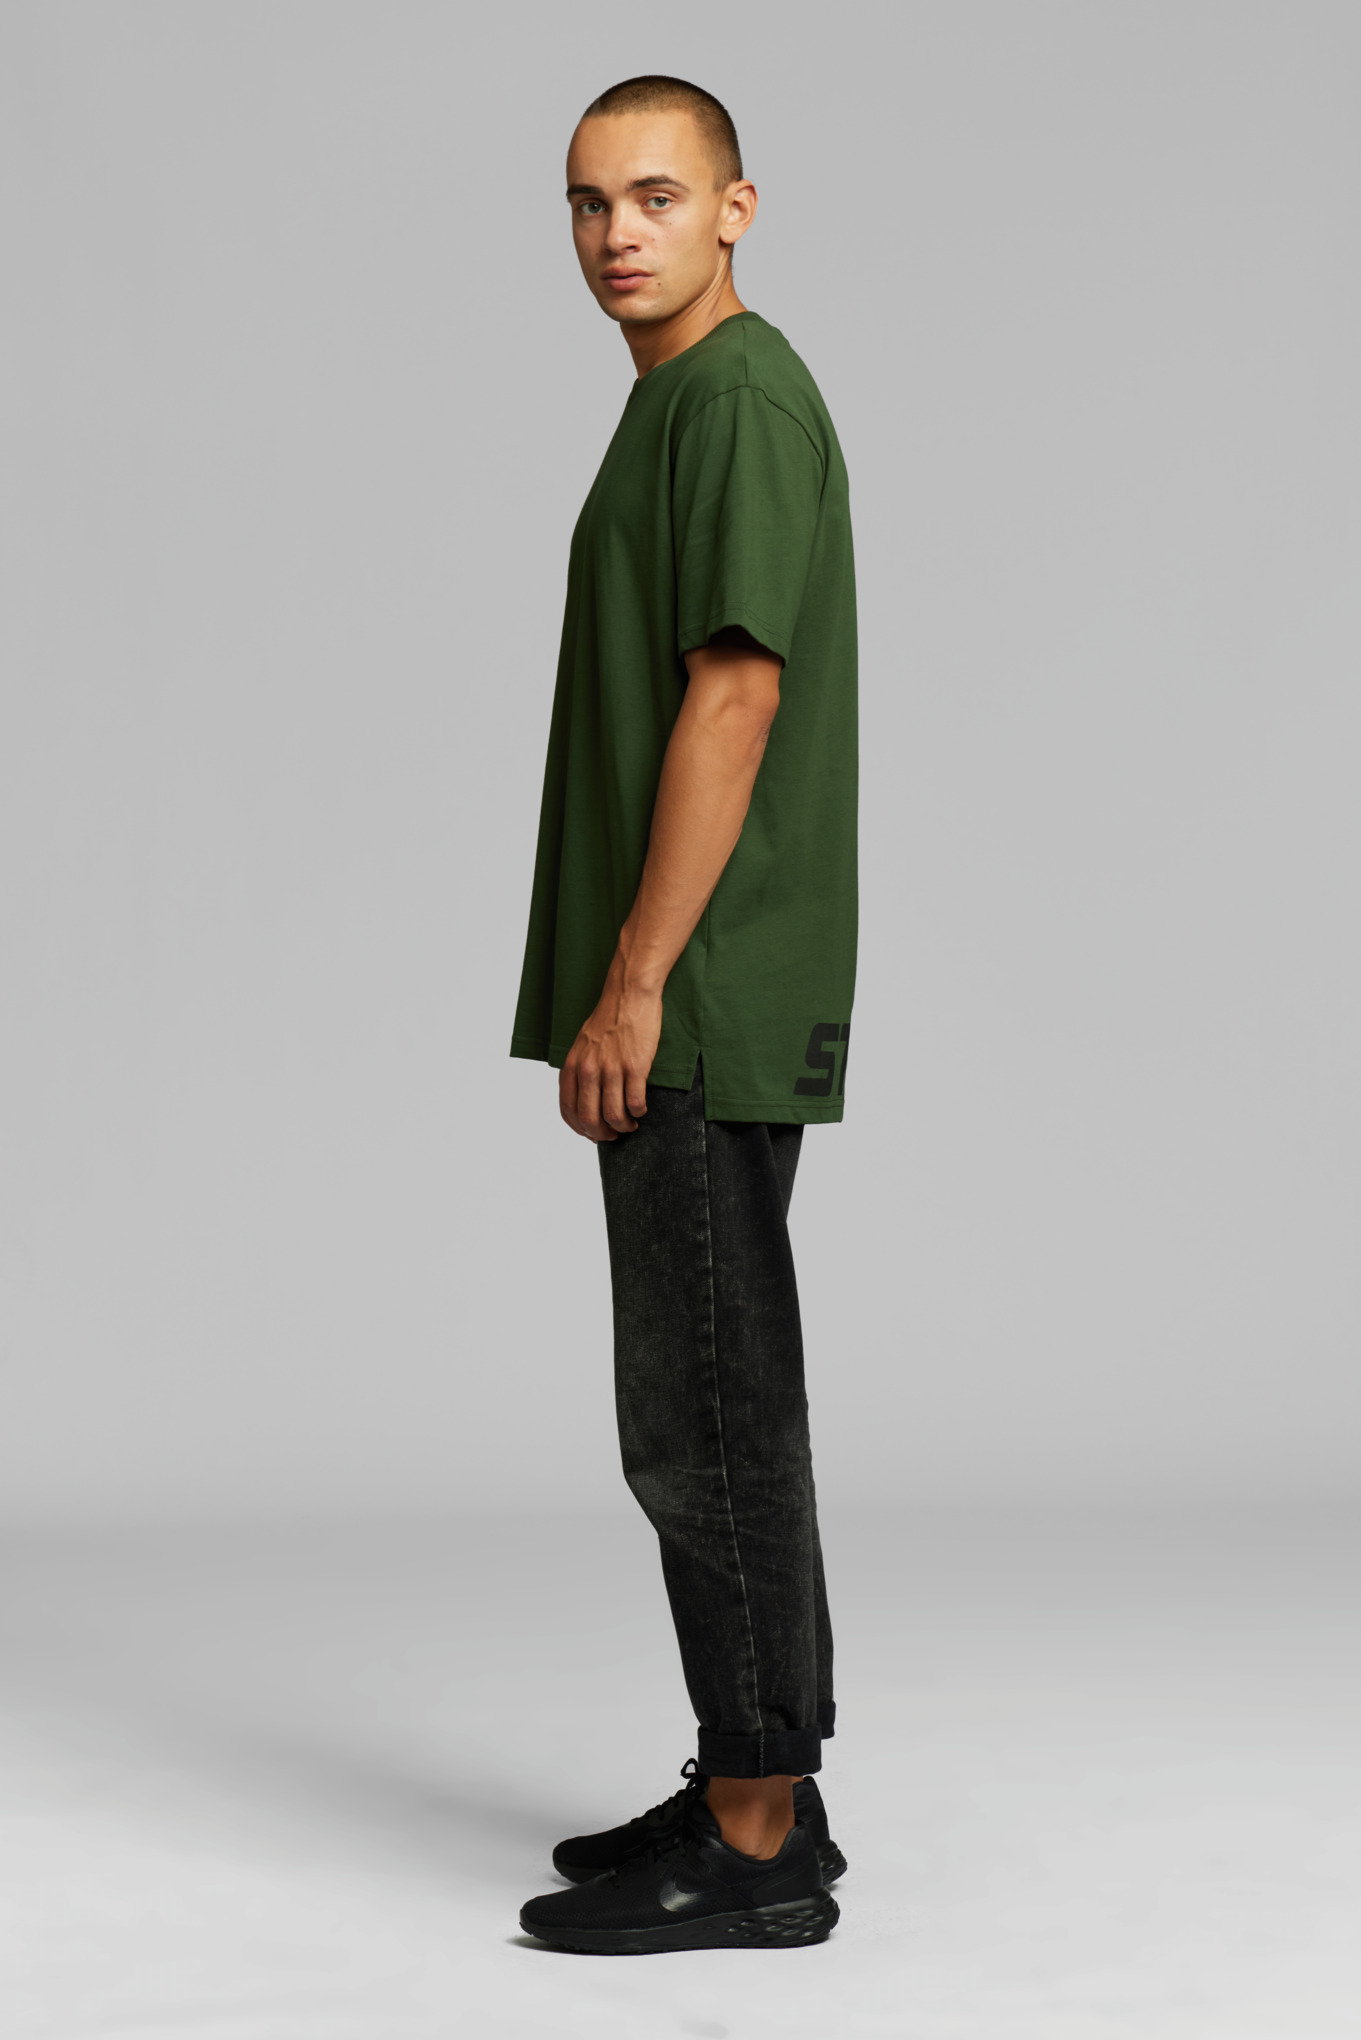 Camiseta hombre LOGO BACK Verde